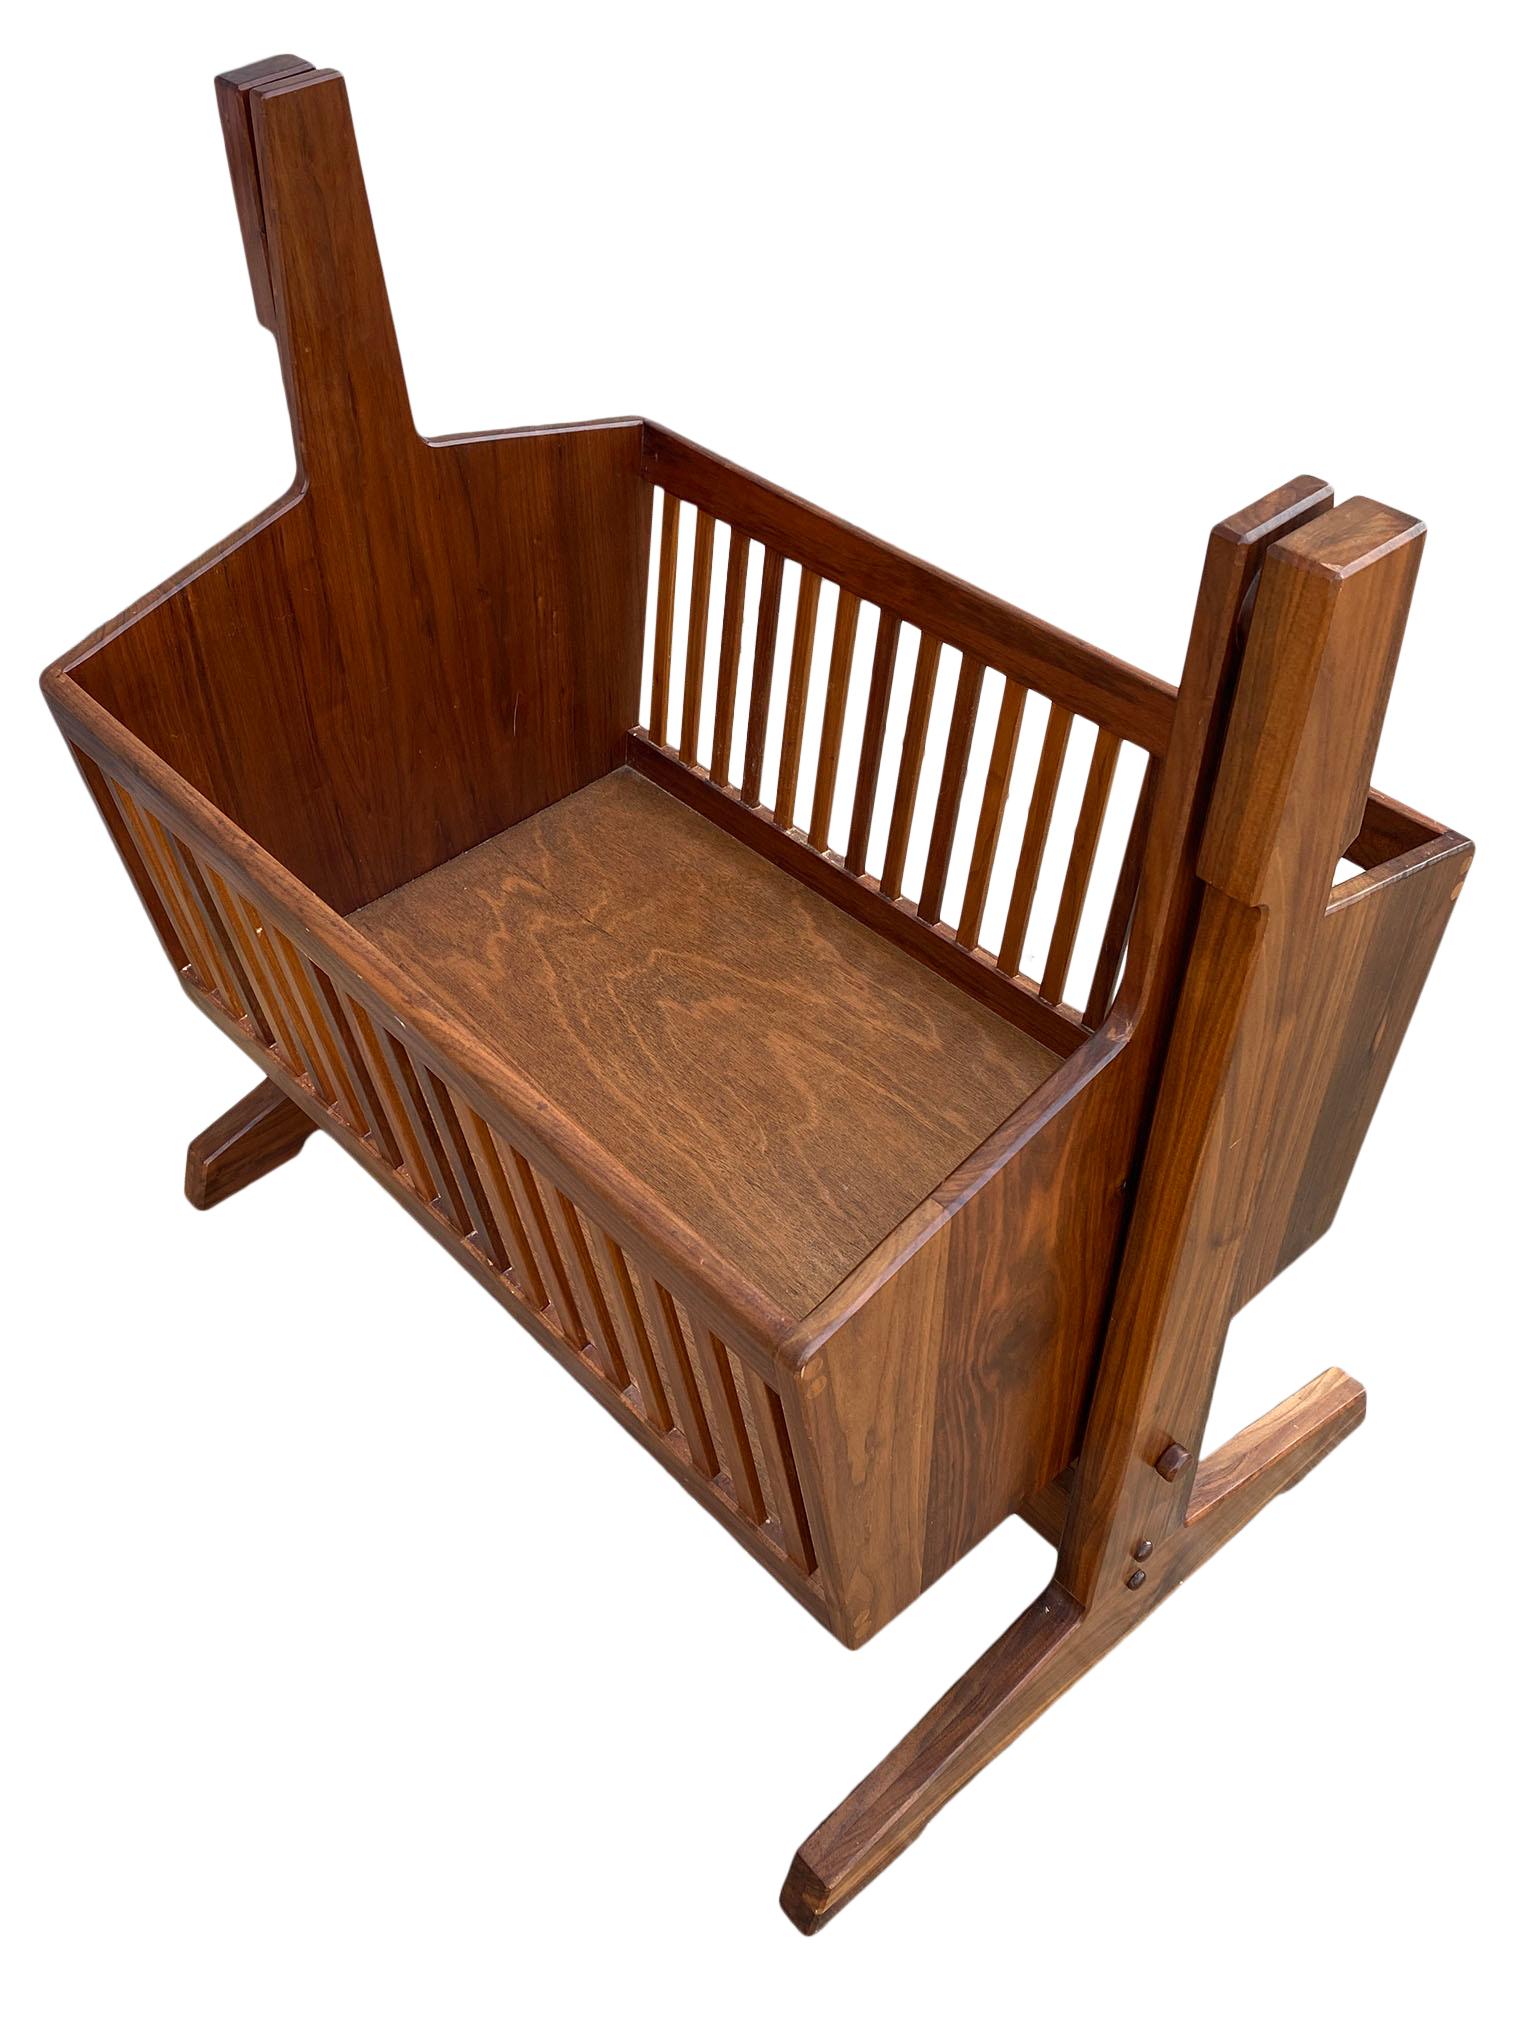 Fin du 20e siècle Lovely Midcentury Solid Walnut Studio Craft Baby Child Swinging Bassinet Crib en vente